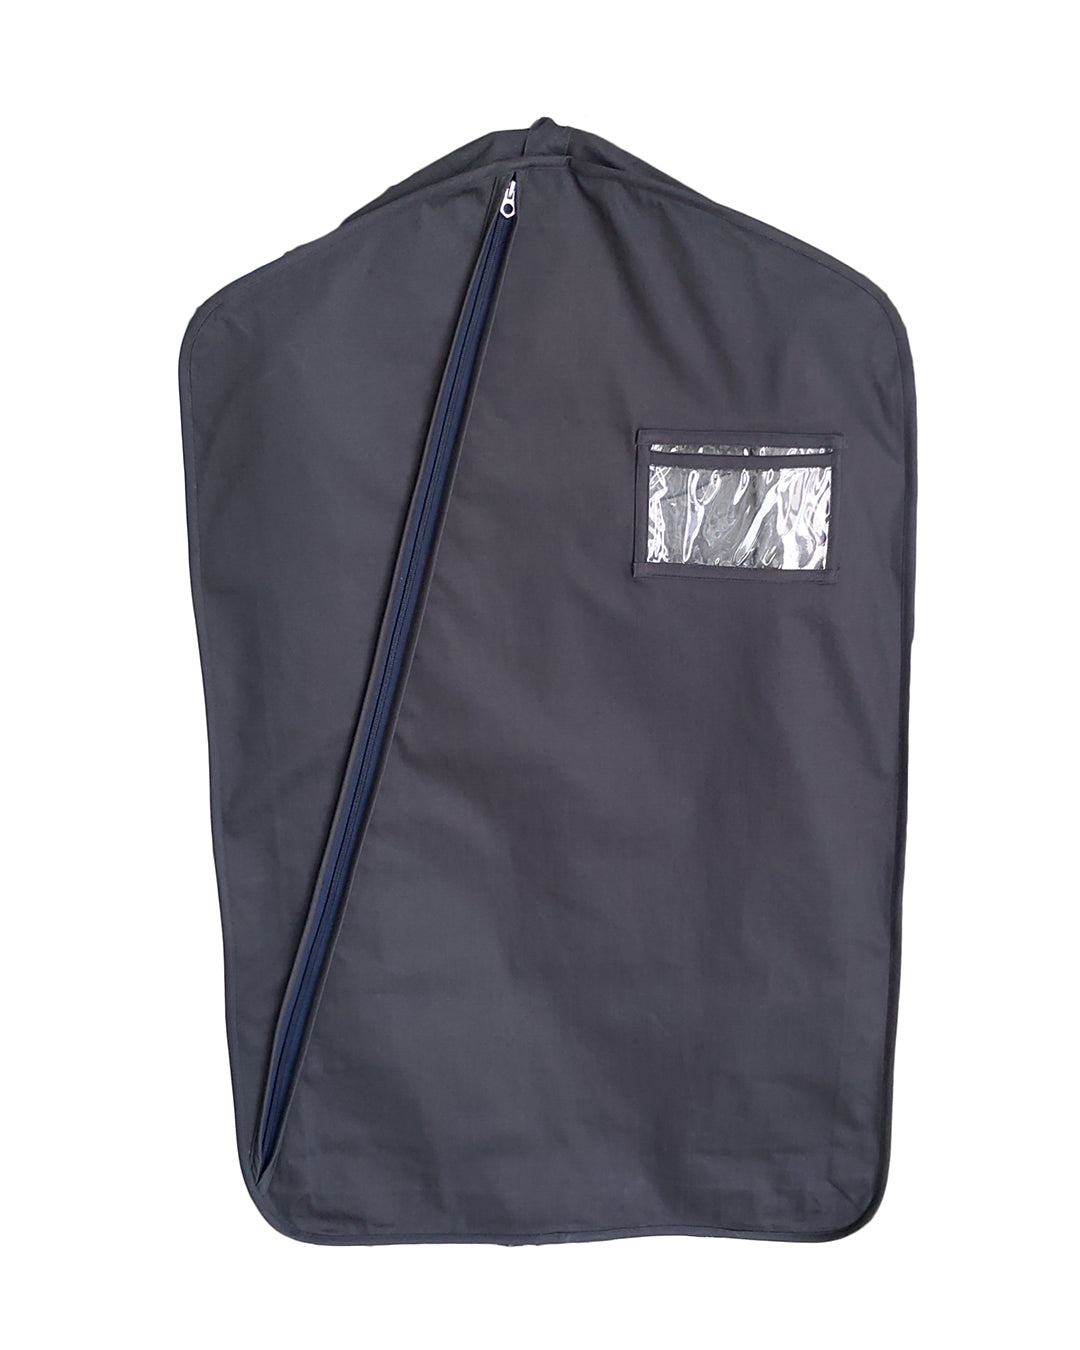 Garment Bag- Charcoal Grey